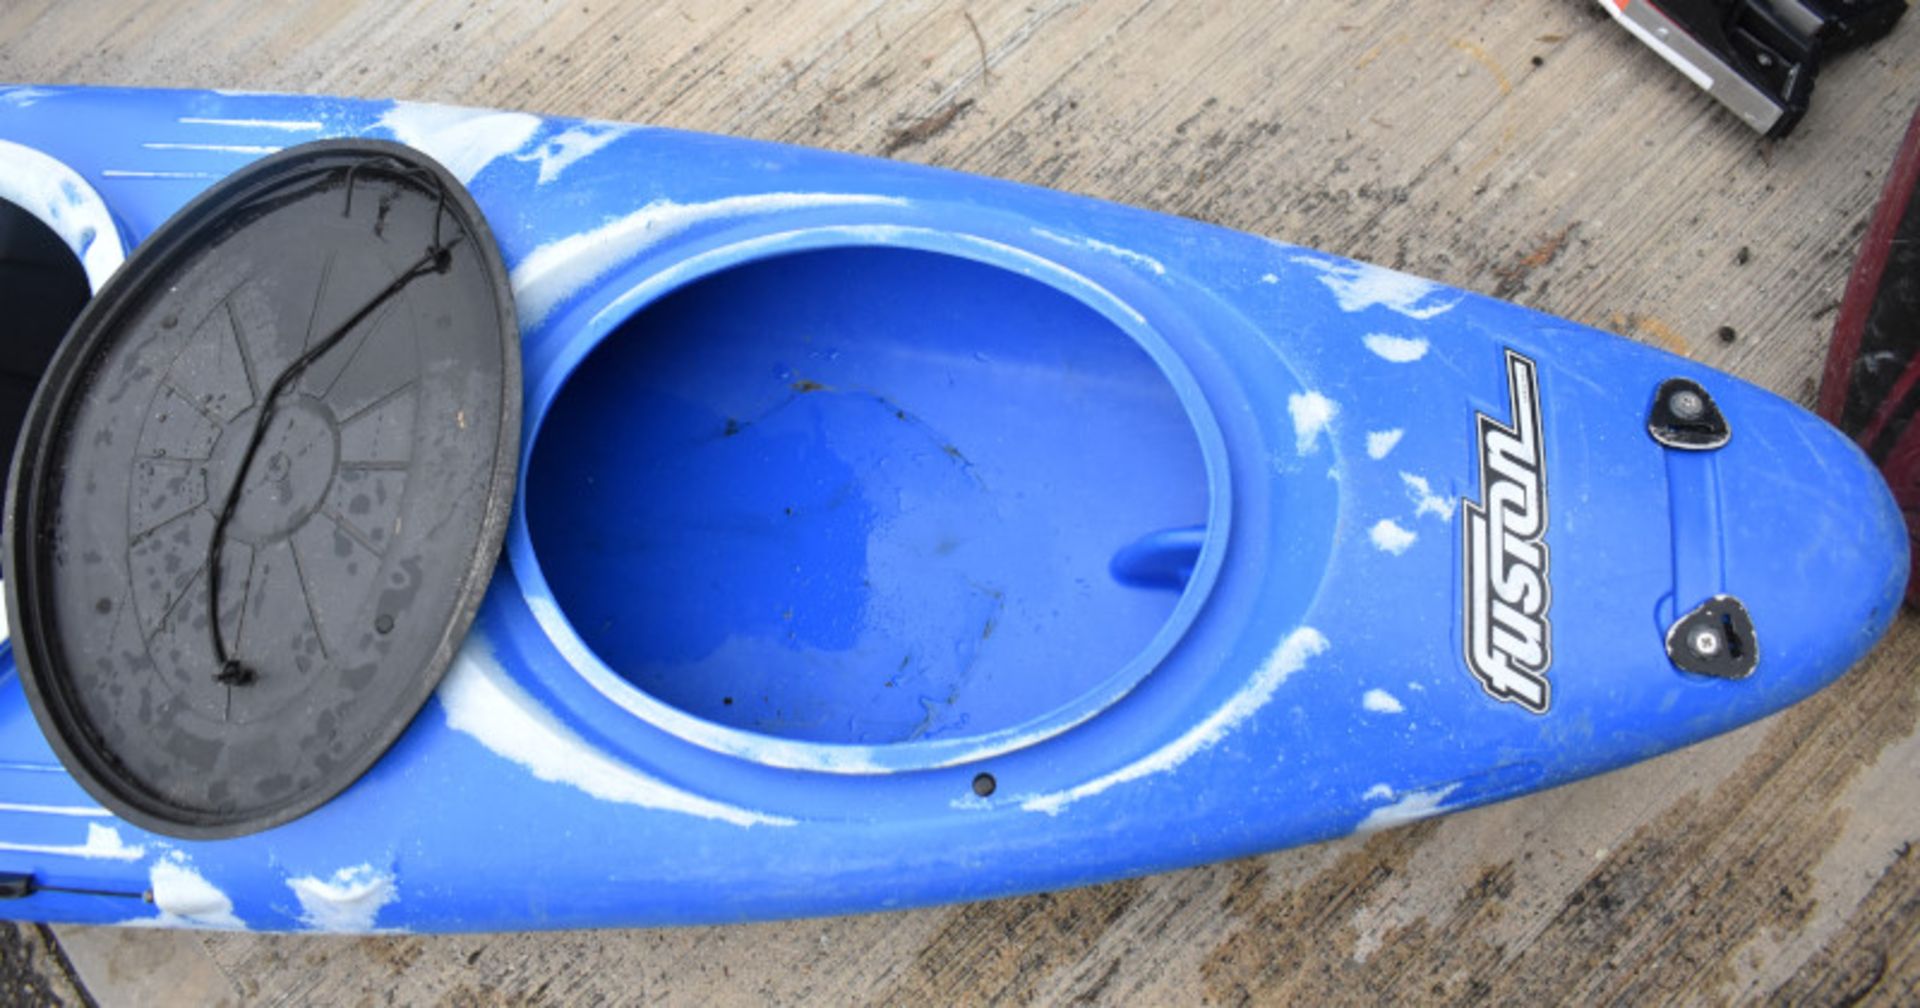 Pyrahna Fusion kayak - no paddles - blue / white - Image 3 of 3